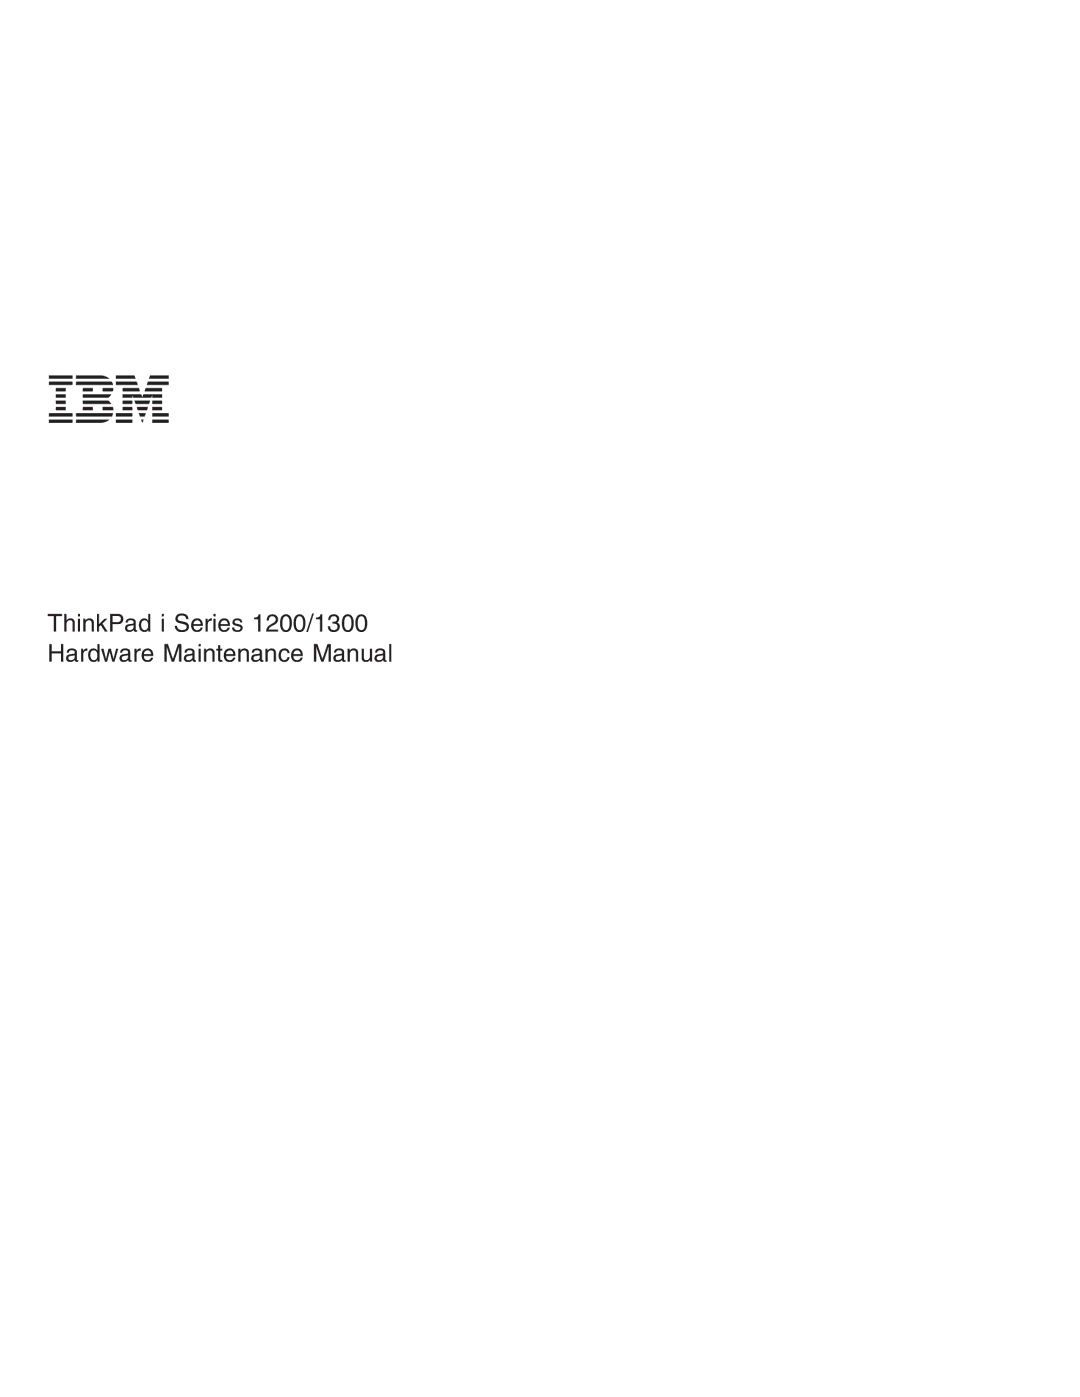 Madge Networks manual ThinkPad i Series 1200/1300 Hardware Maintenance Manual 